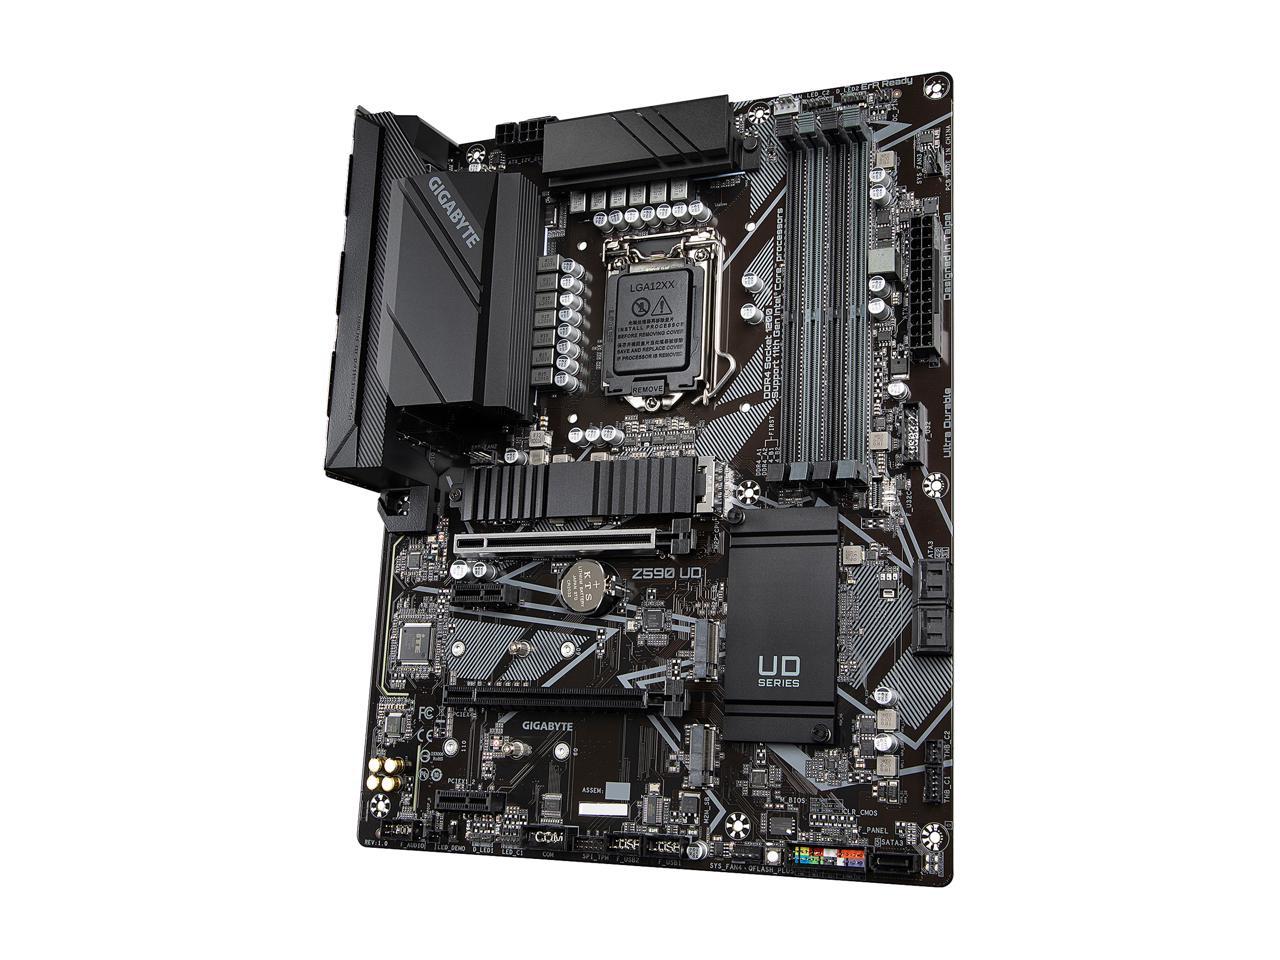 Gigabyte Z590 Ud Lga 1200 Intel Z590 Atx Motherboard With Triple M.2, Pcie 4.0, Usb 3.2 Gen 2, 2.5Gbe Lan